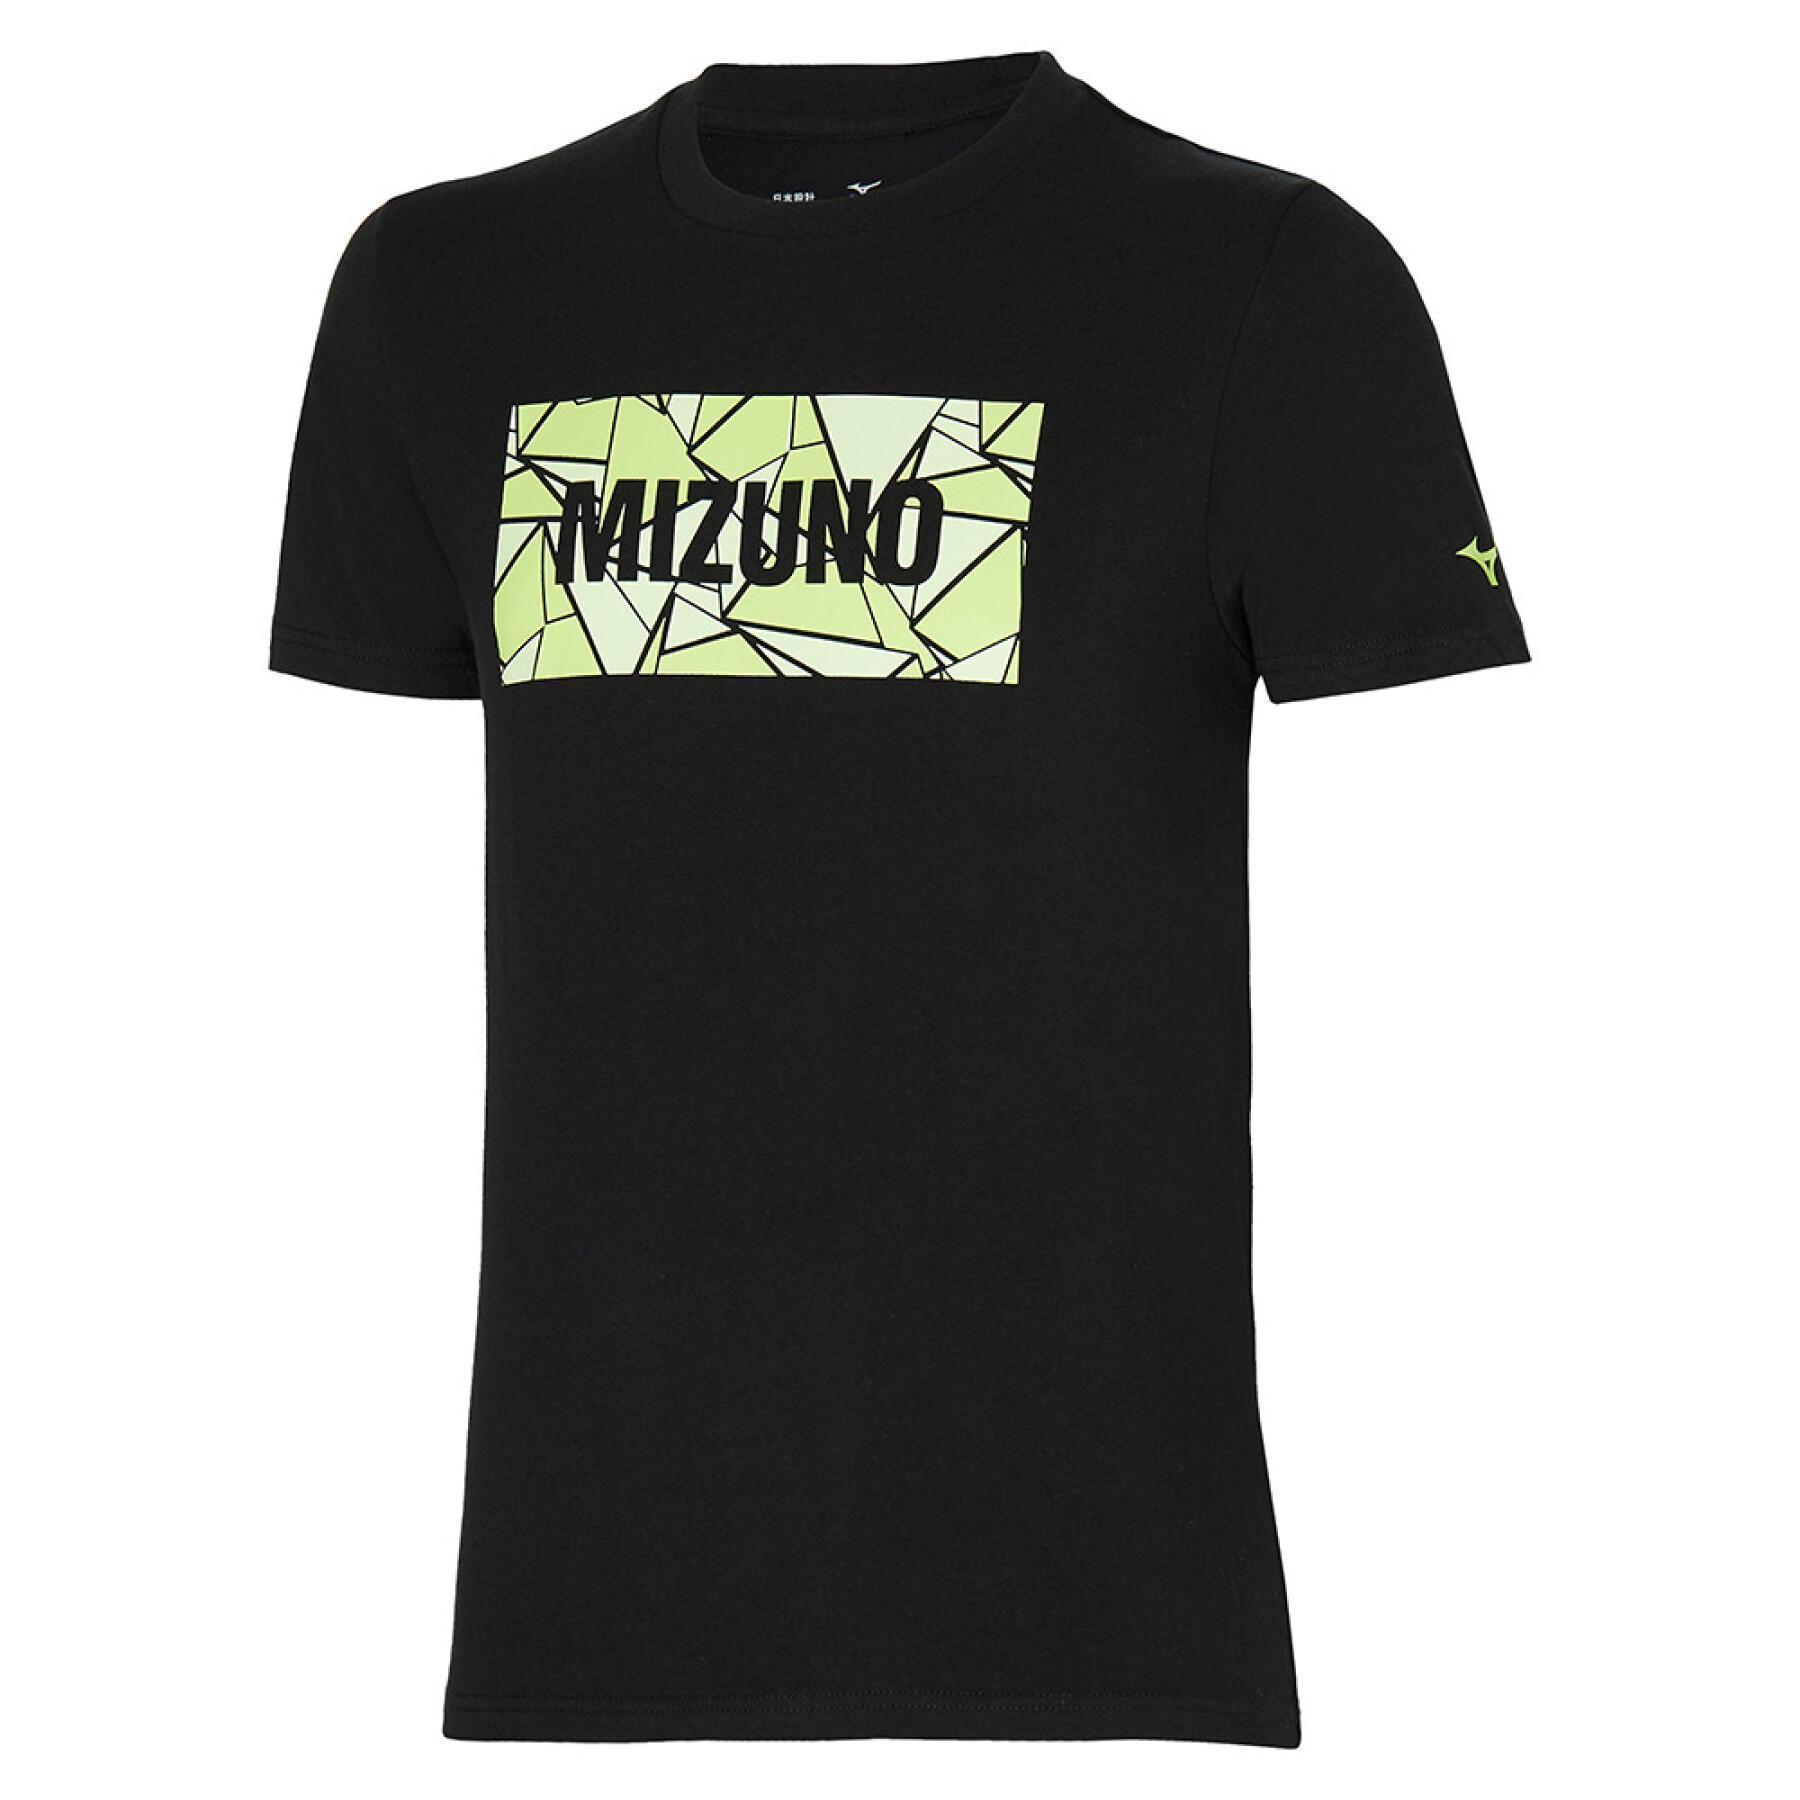 Camiseta de mujer Mizuno Athletic